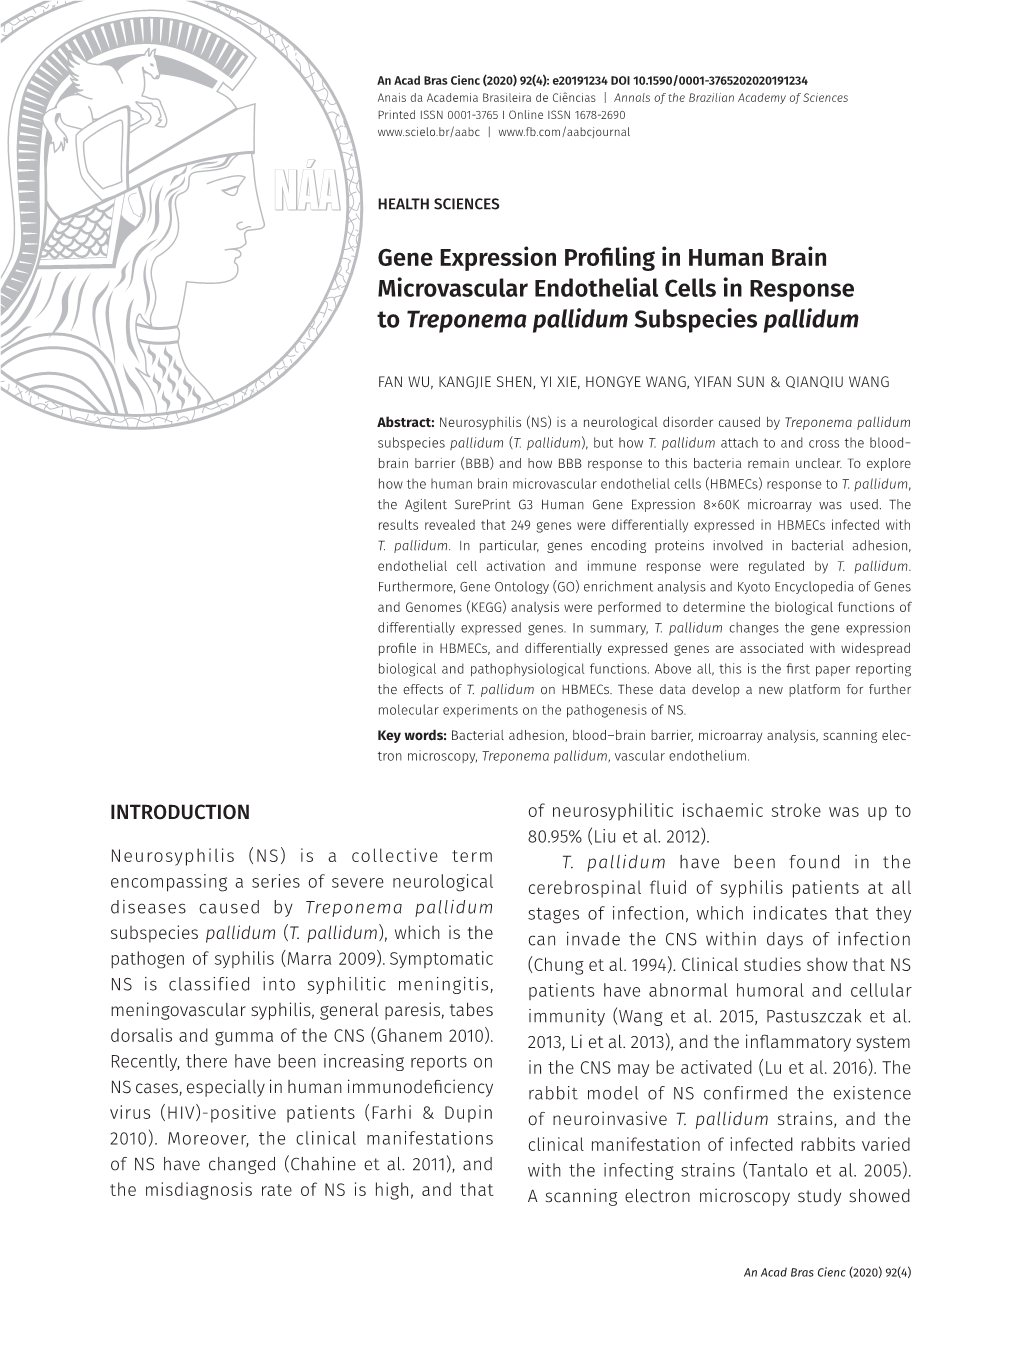 Gene Expression Profiling in Human Brain Microvascular Endothelial Cells in Response to Treponema Pallidum Subspecies Pallidum